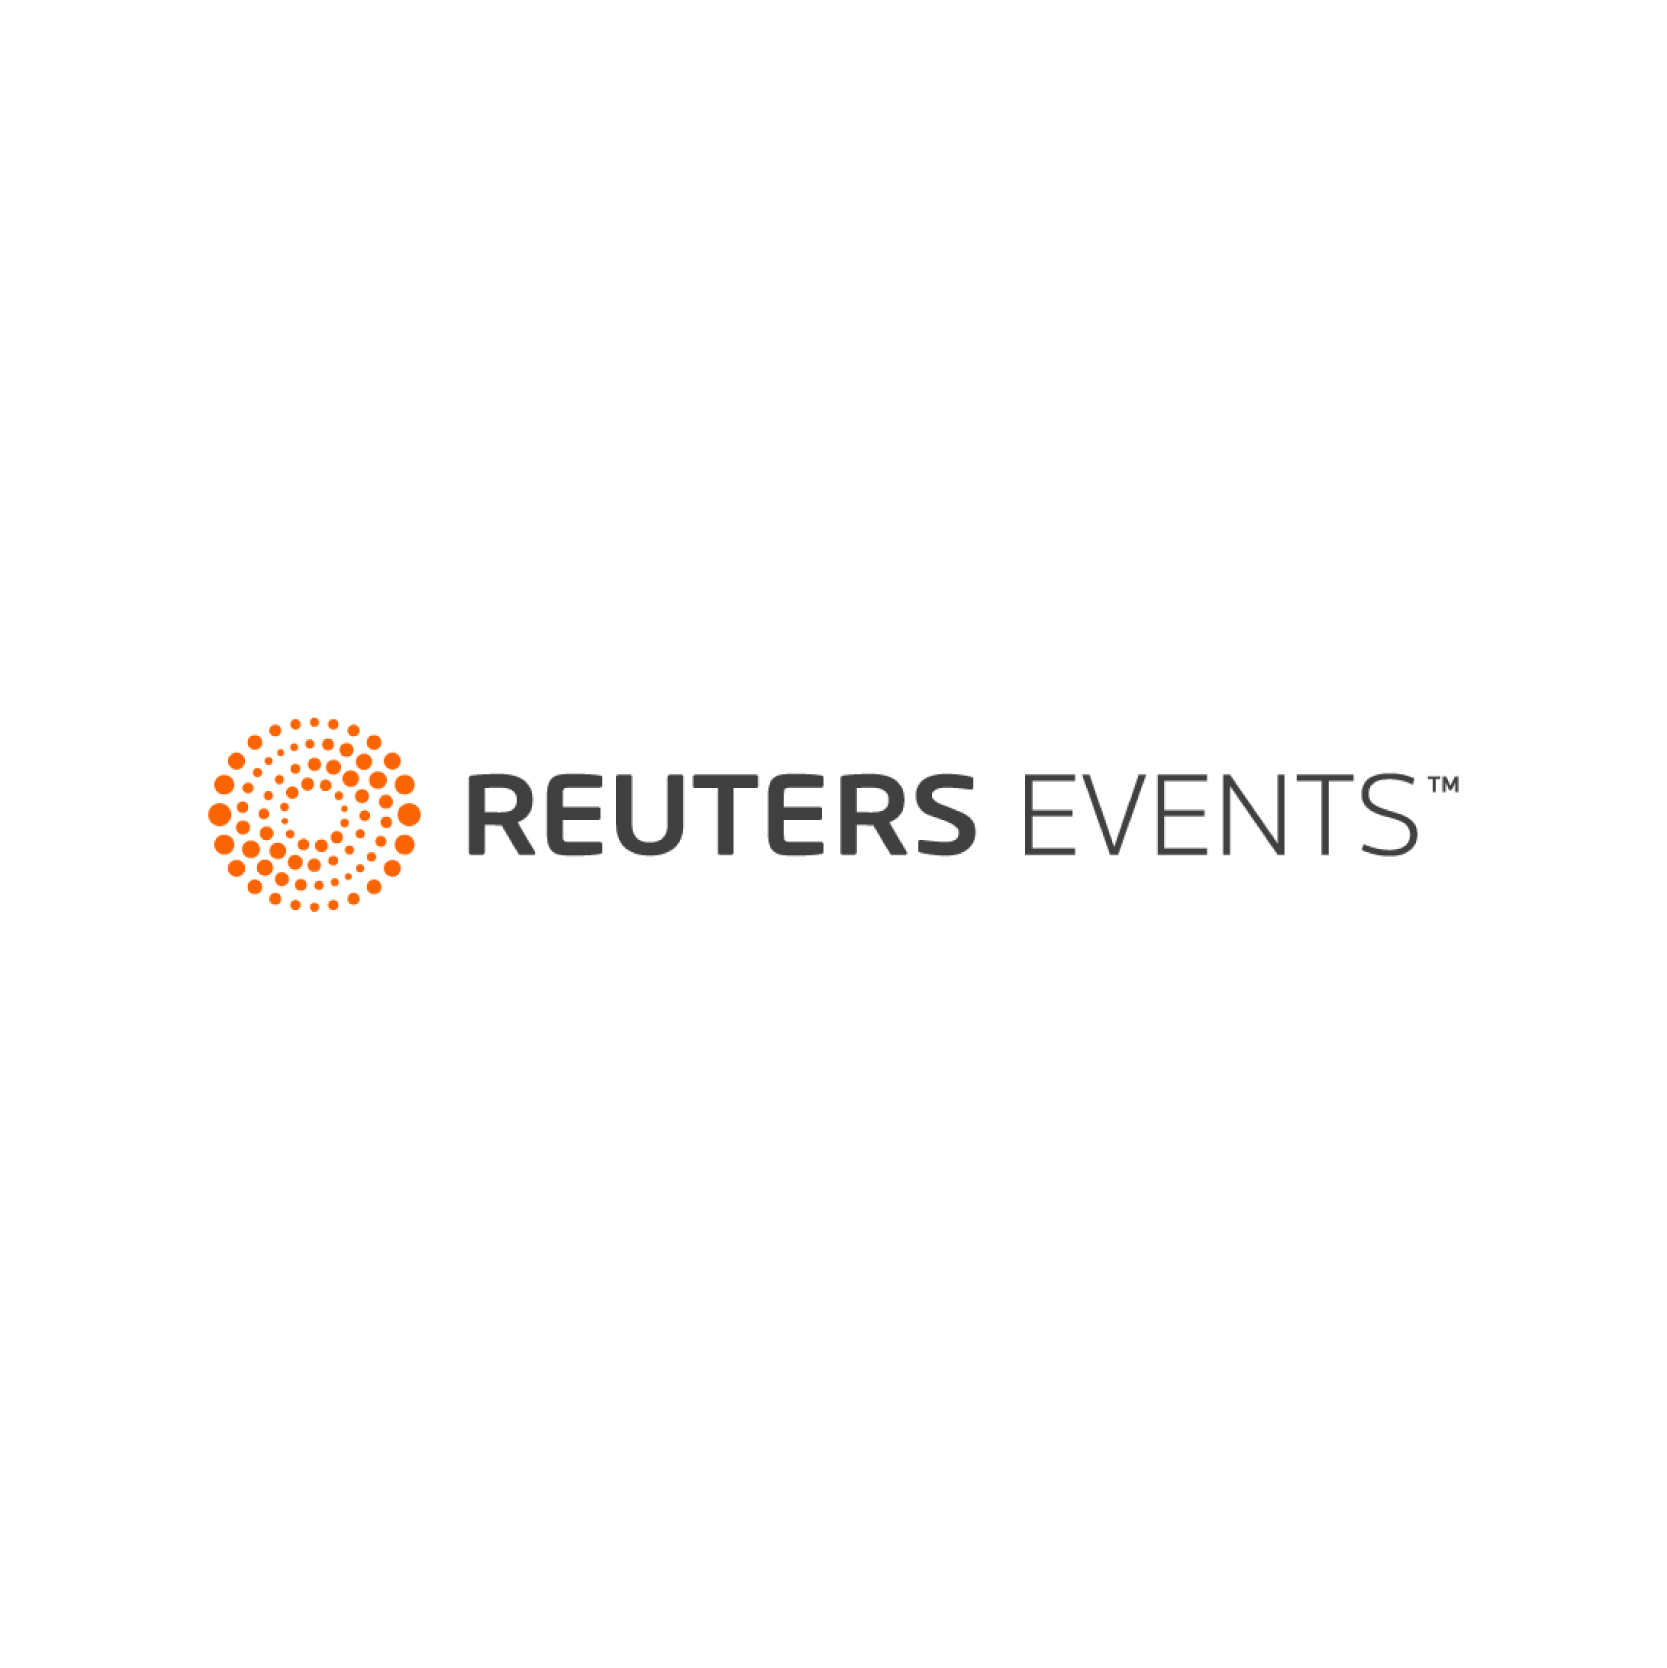 Reuters Events